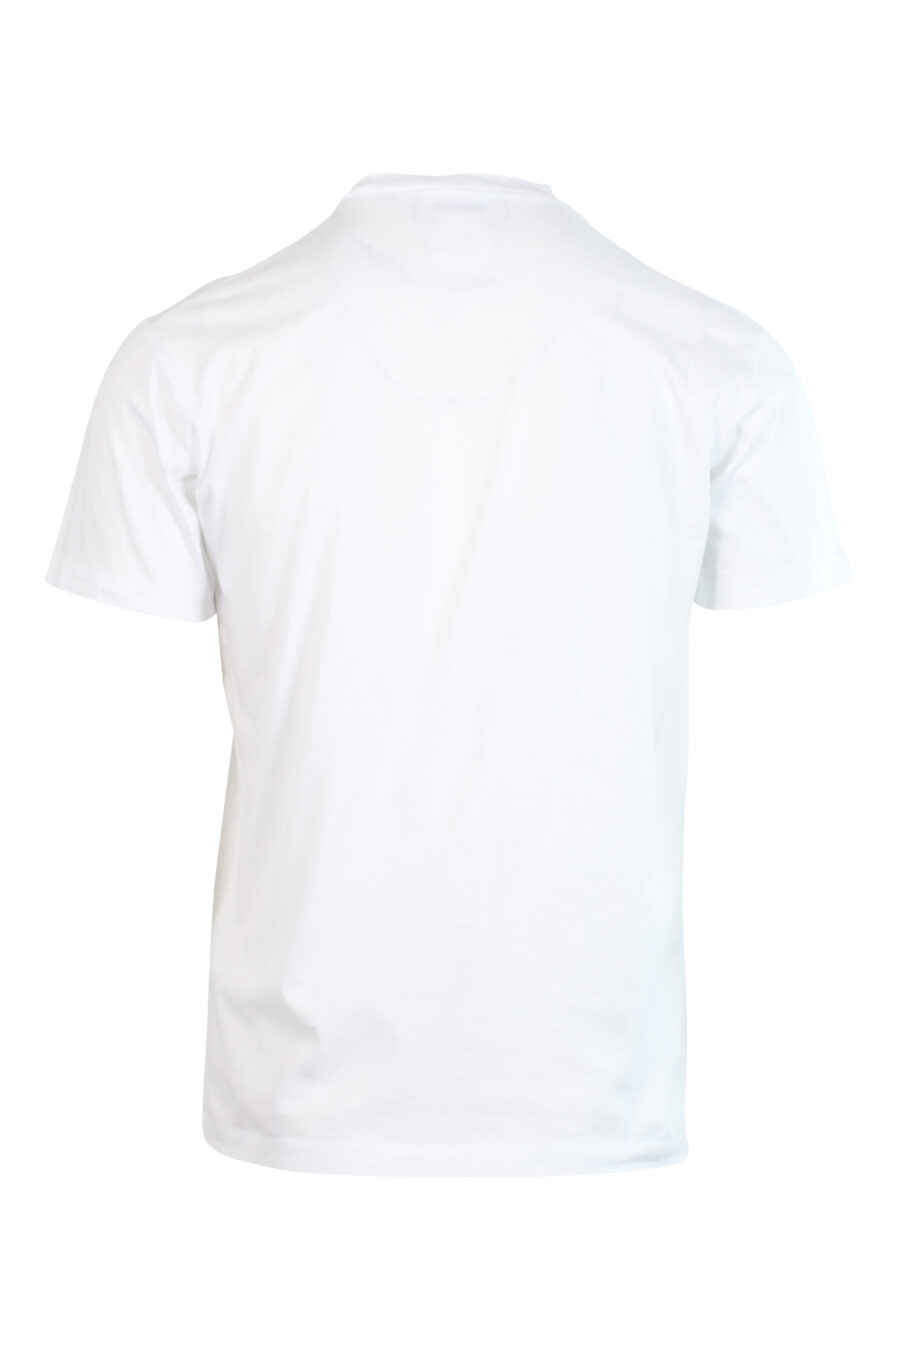 Weißes T-Shirt mit monochromem Logo - 8052134946381 2